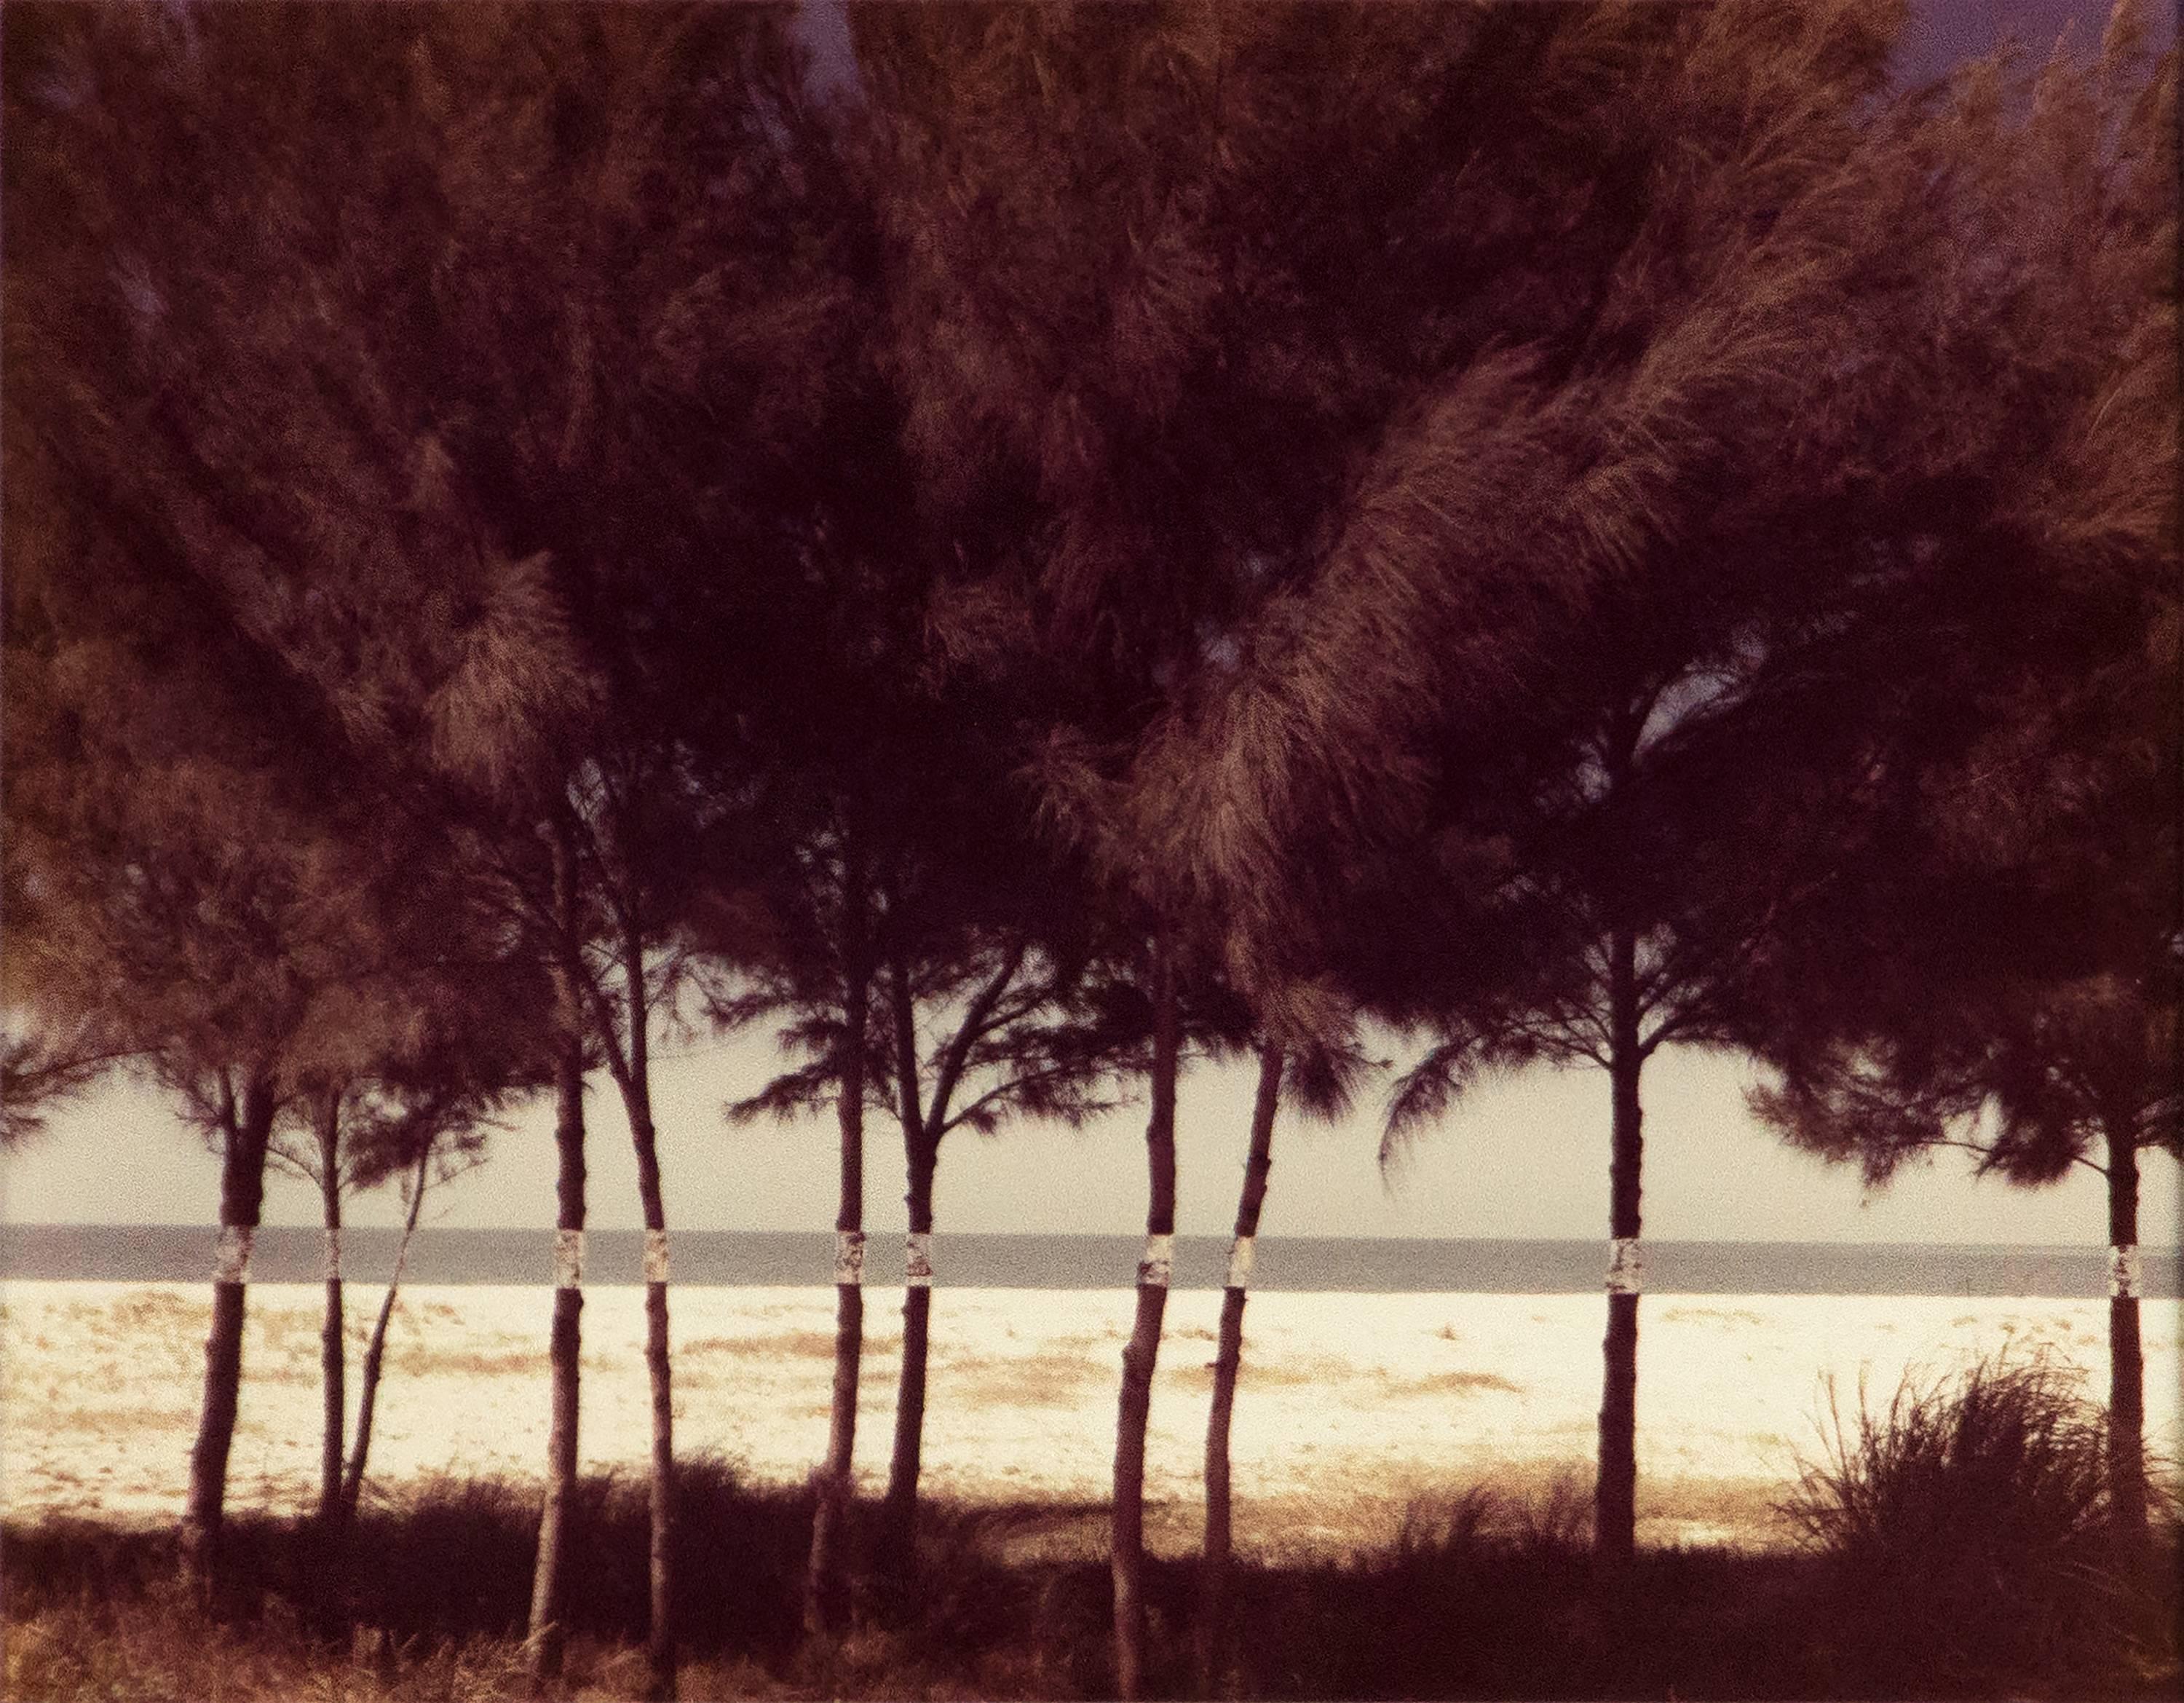 John Pfahl Landscape Photograph - Australian Pines, Fort DeSoto, Florida (February 1977)